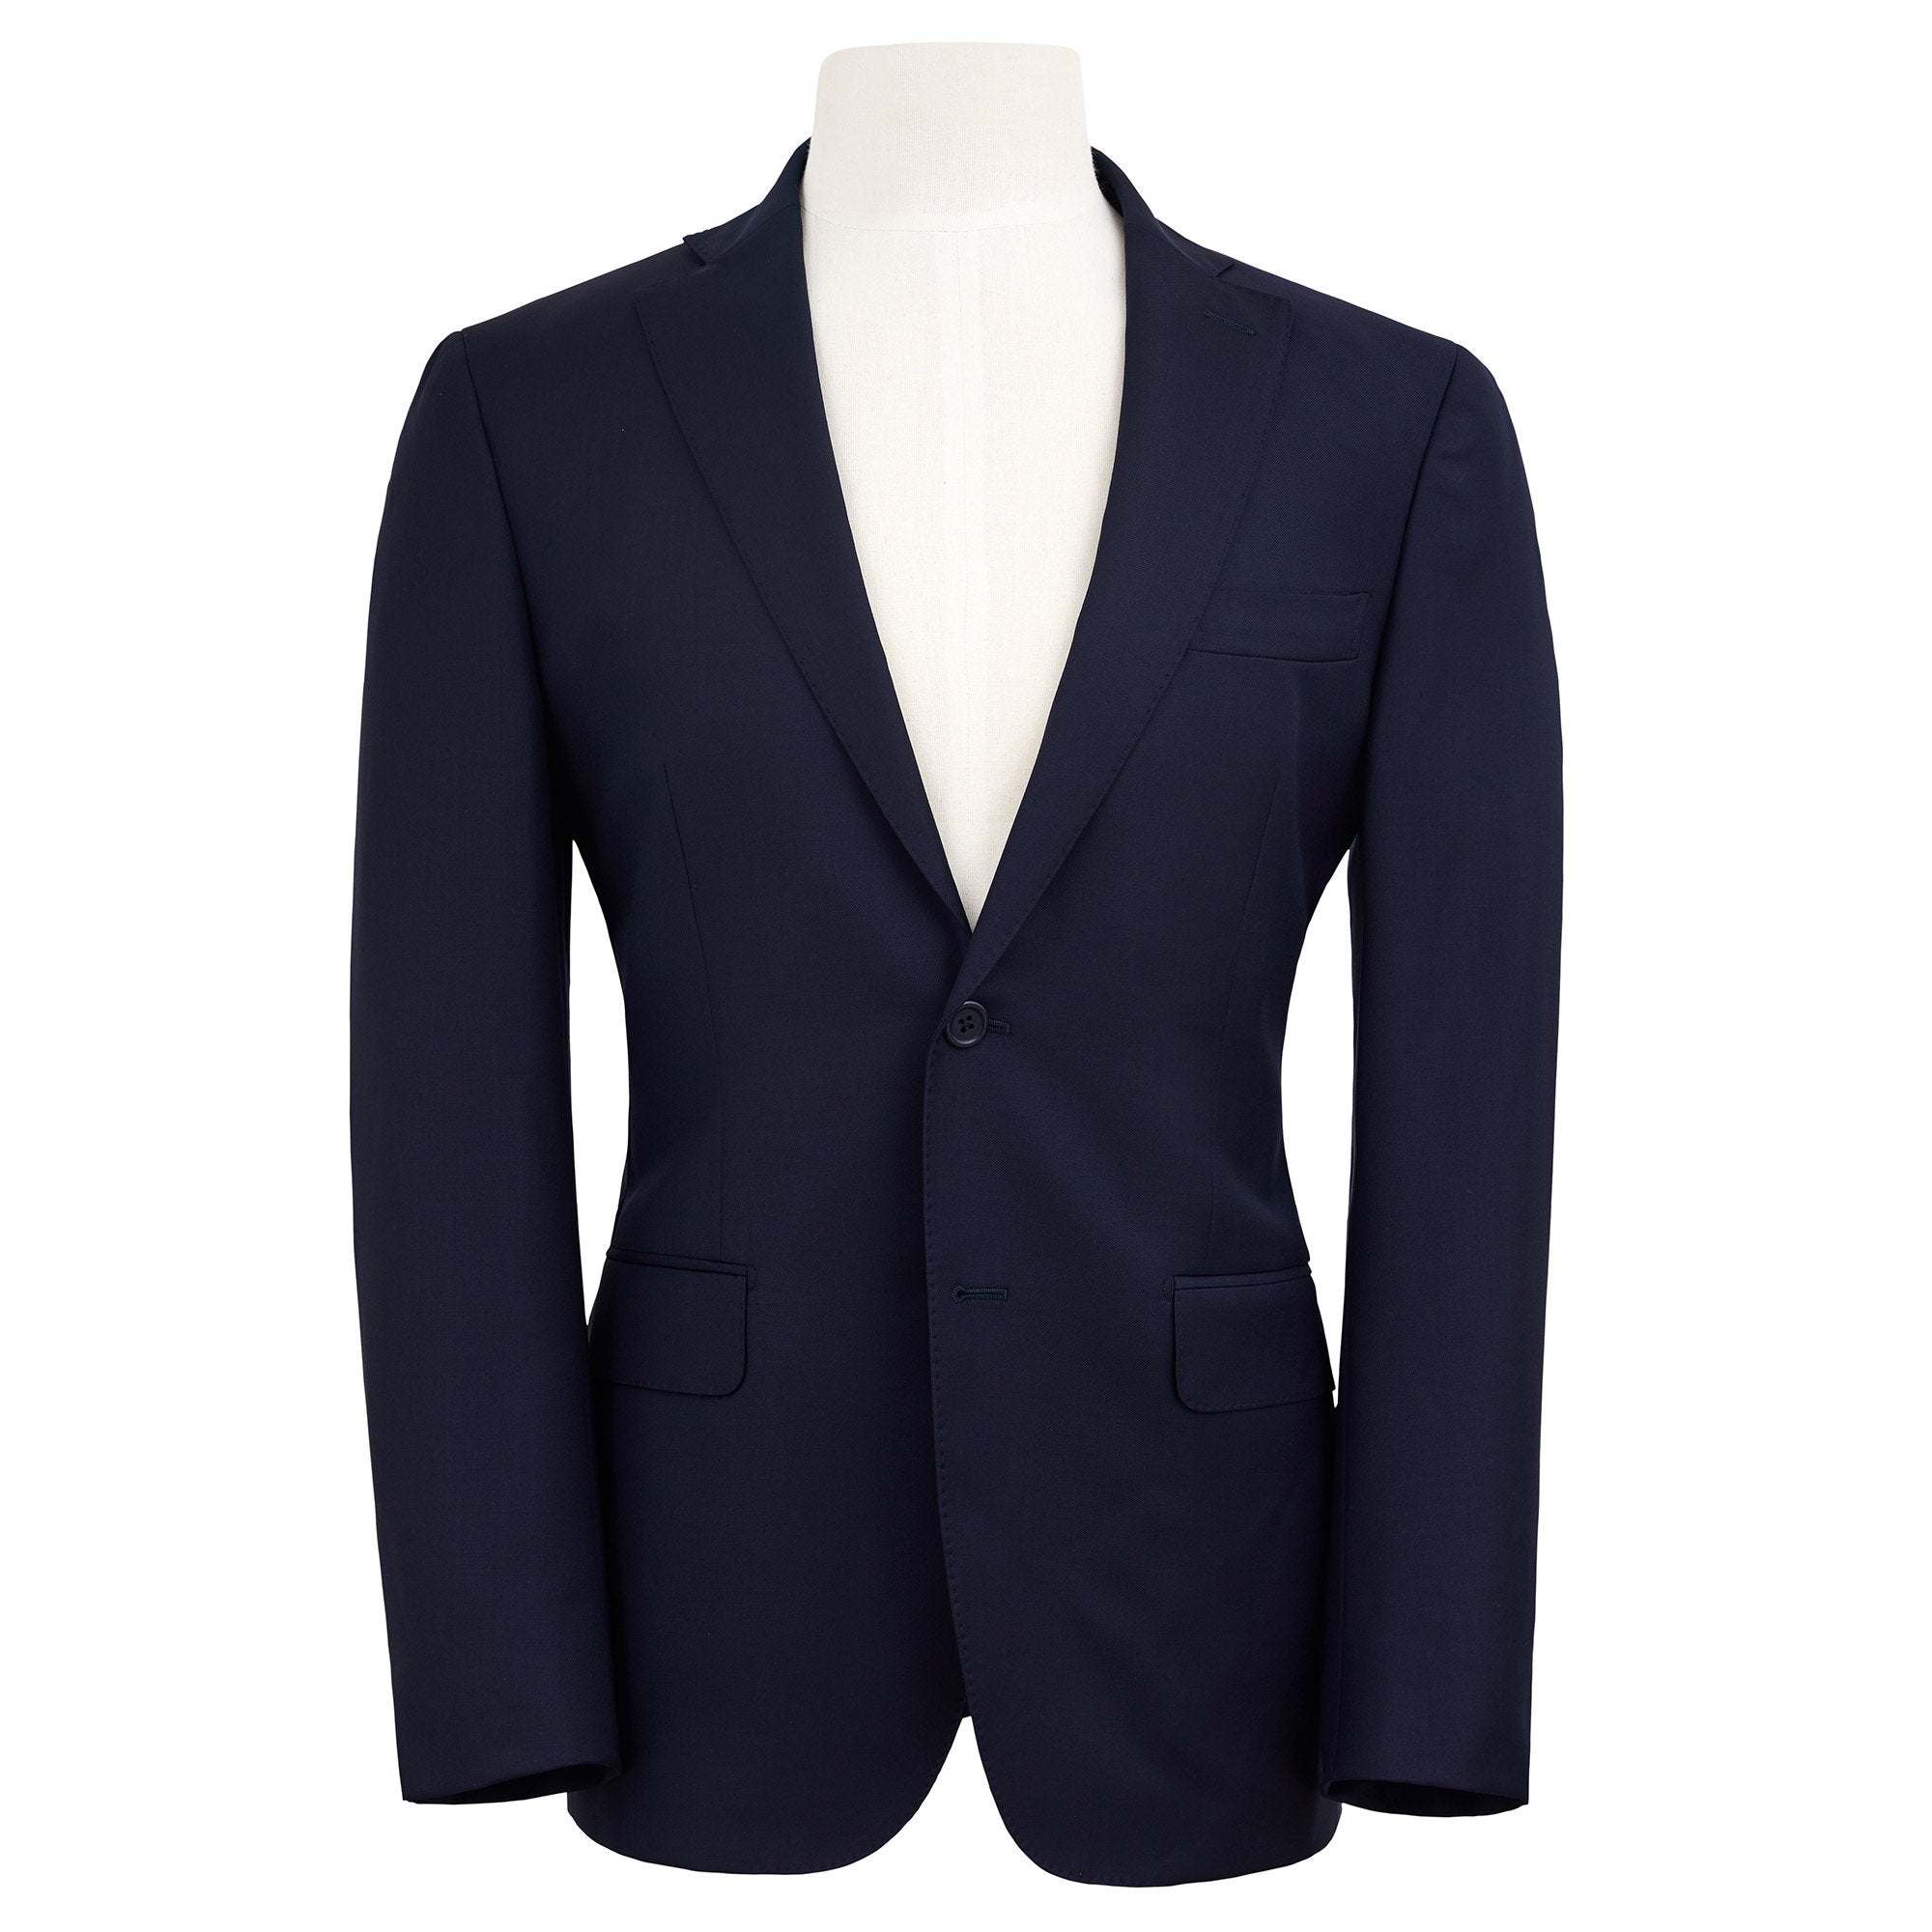 HENRY SARTORIAL Twill Suit NAVY SH - Henry BucksSuits23BSR023 - NAVY - S - 46